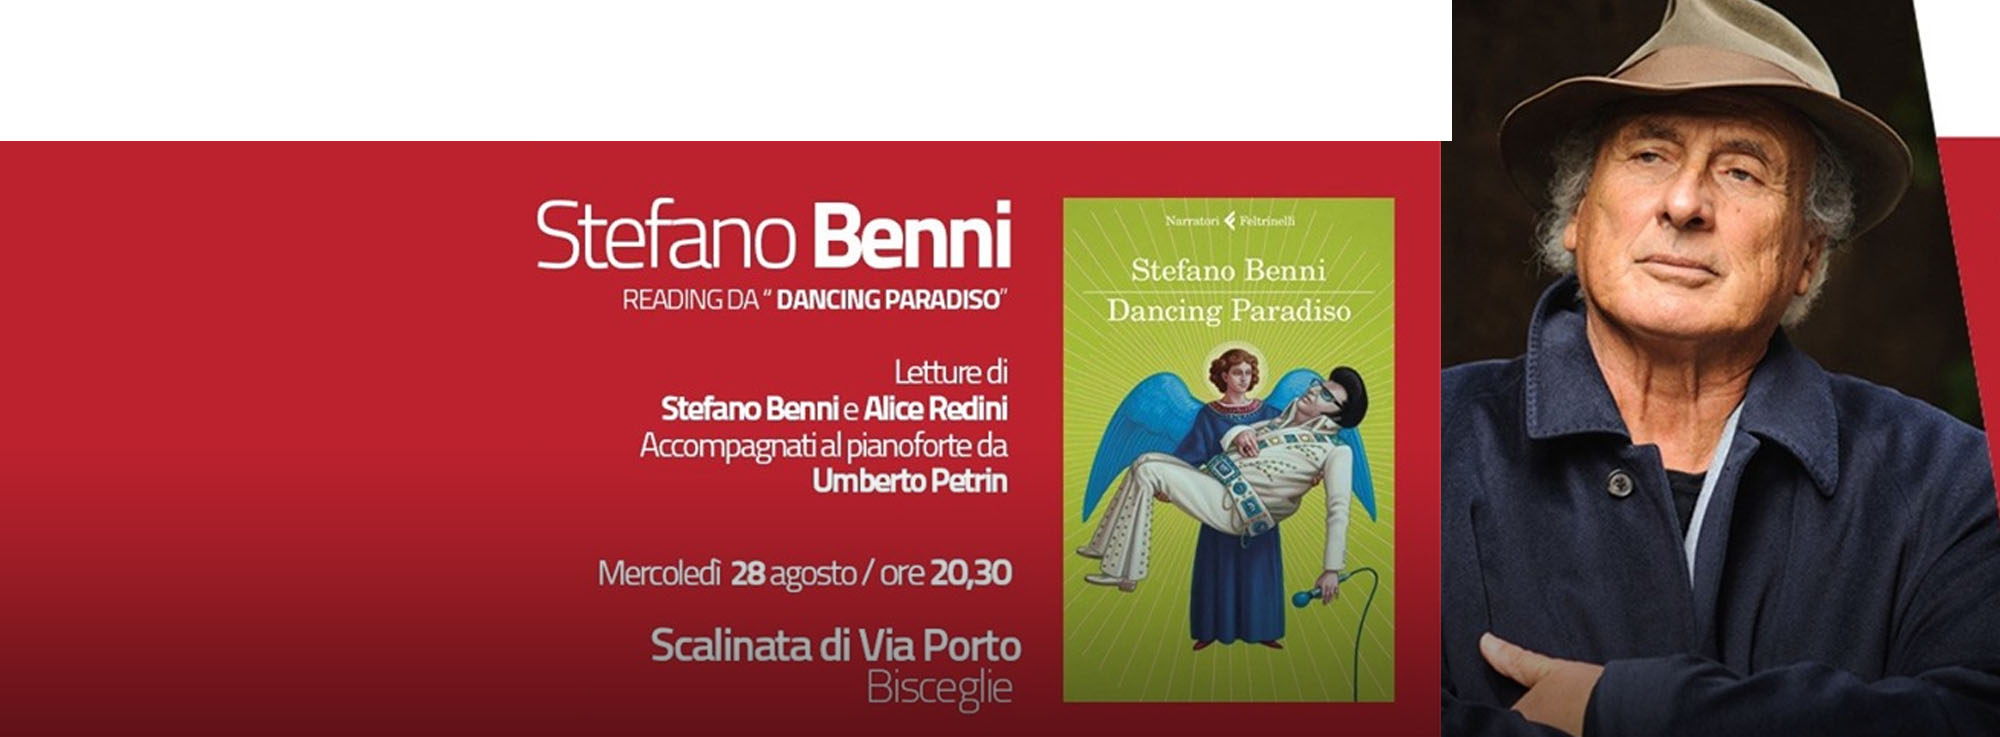 Bisceglie: Stefano Benni presenta Dancing Paradiso